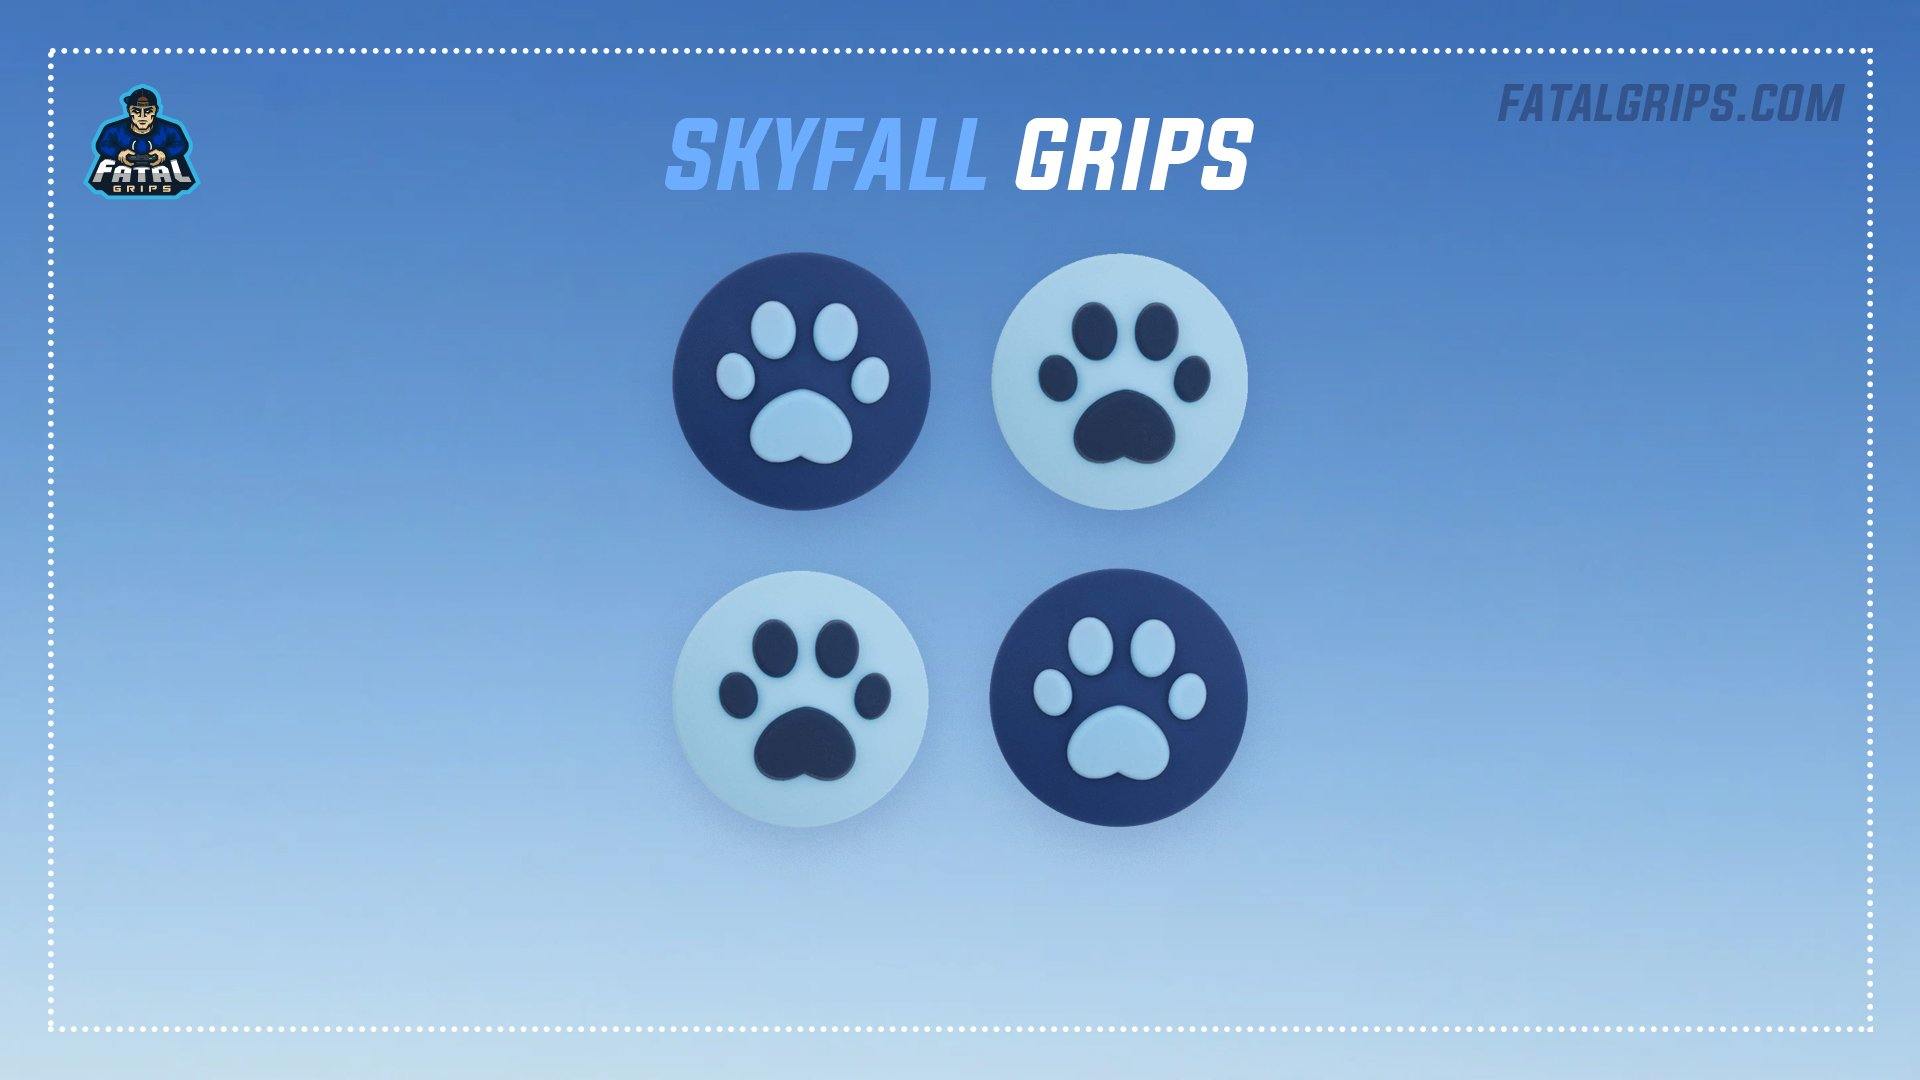 Skyfall Grips - Fatal Grips